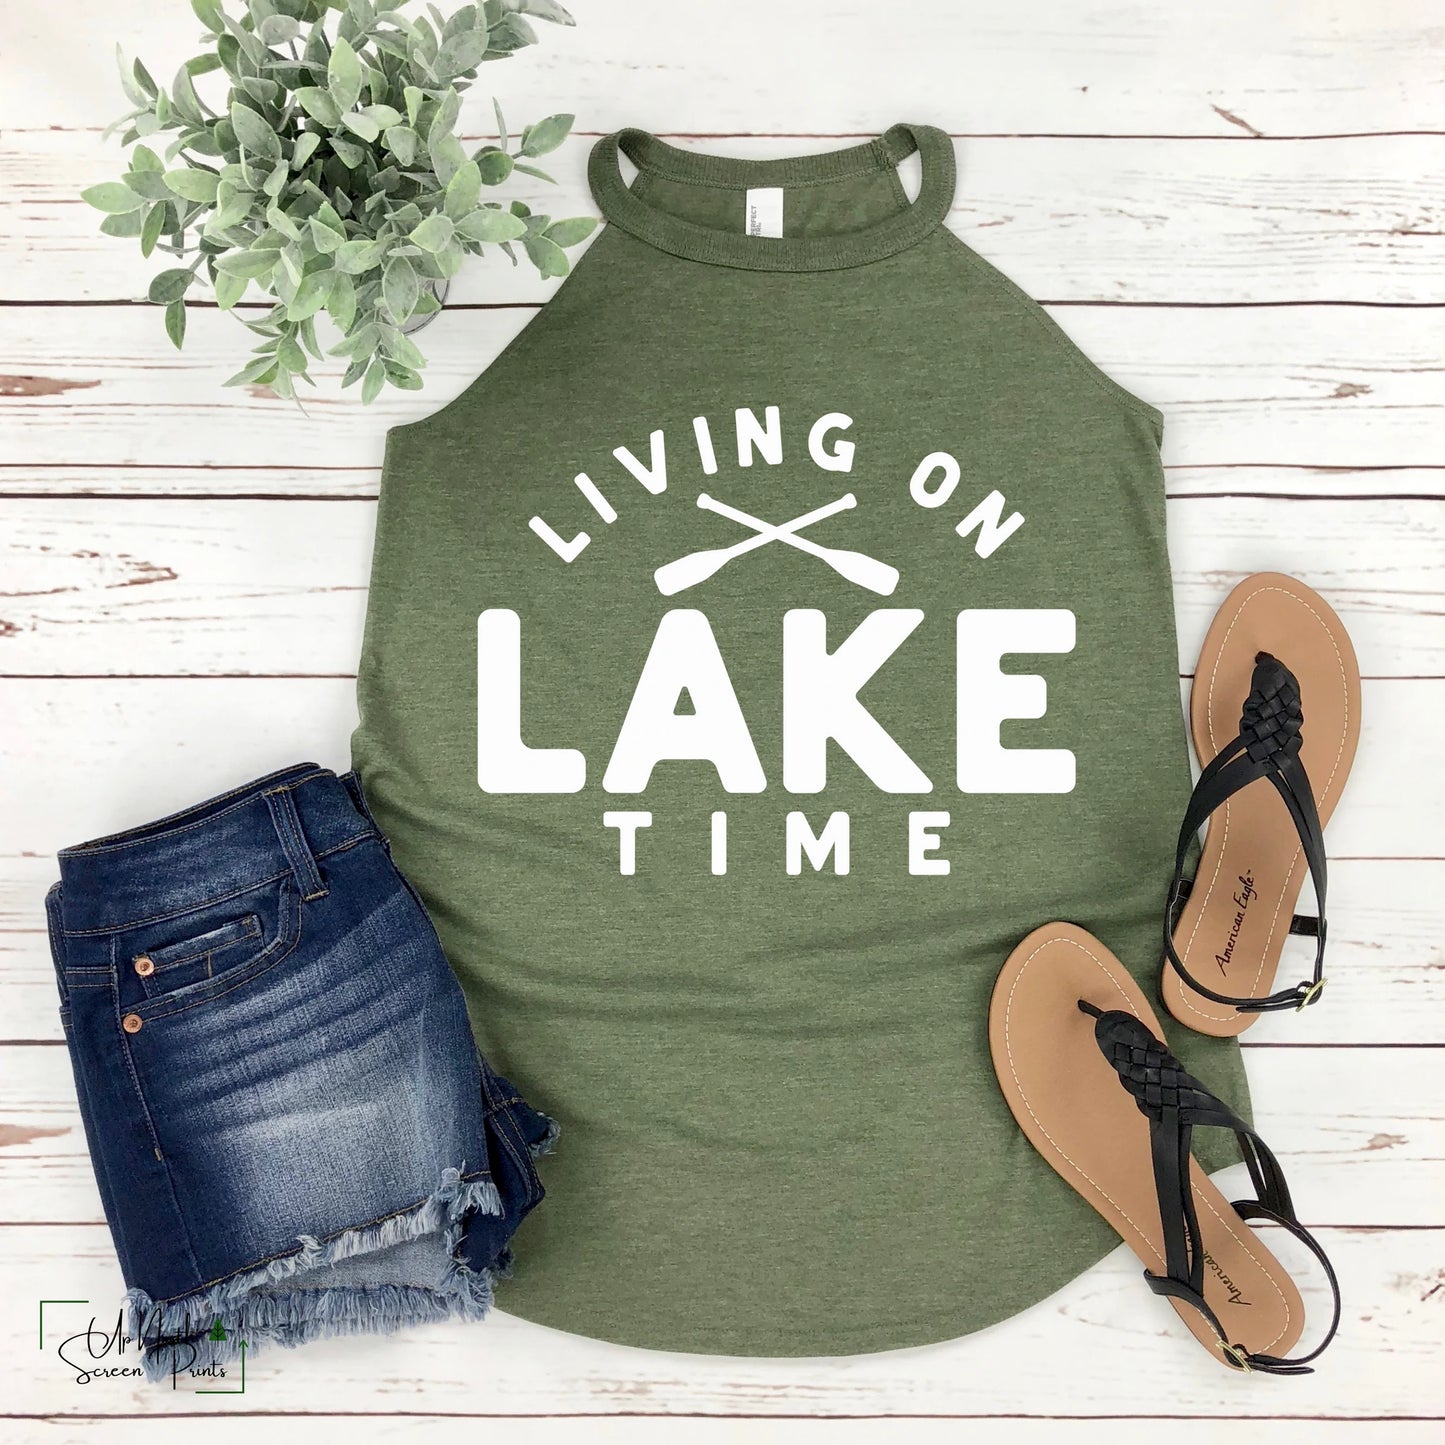 Livin on lake time